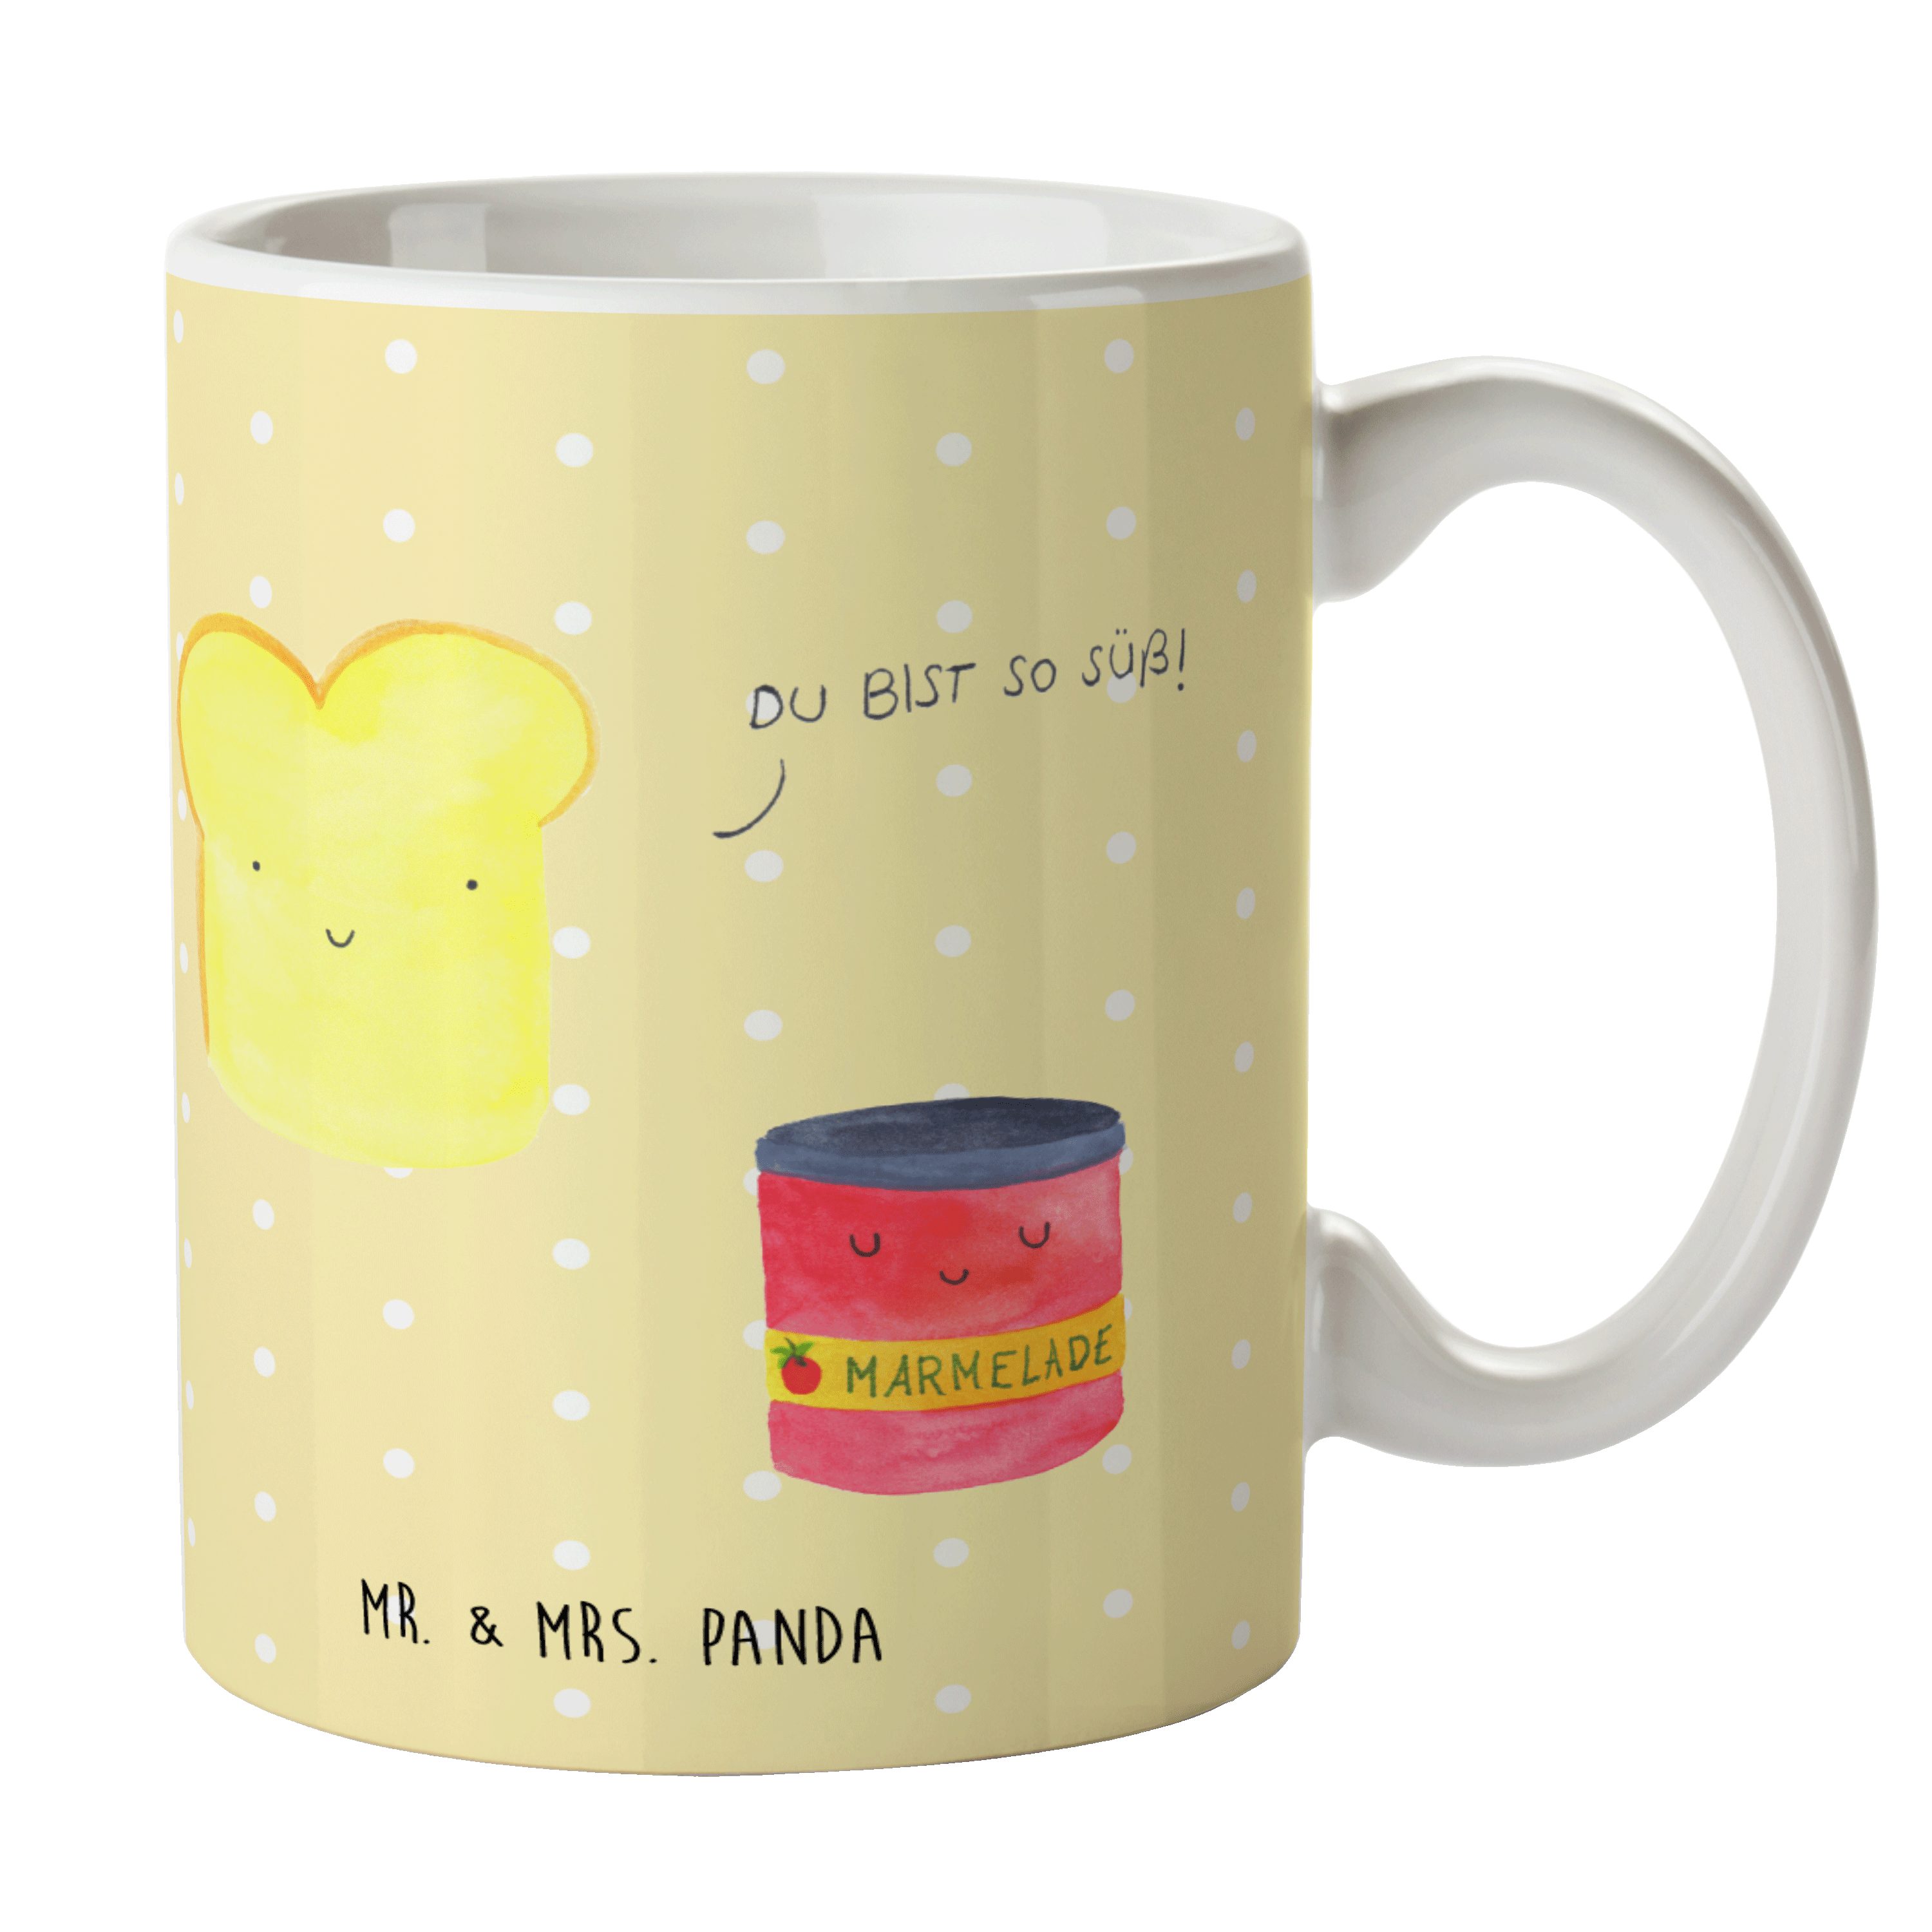 Mr. & Mrs. Panda Tasse Toast & Marmelade - Gelb Pastell - Geschenk, Frühstück Einladung, Toa, Keramik